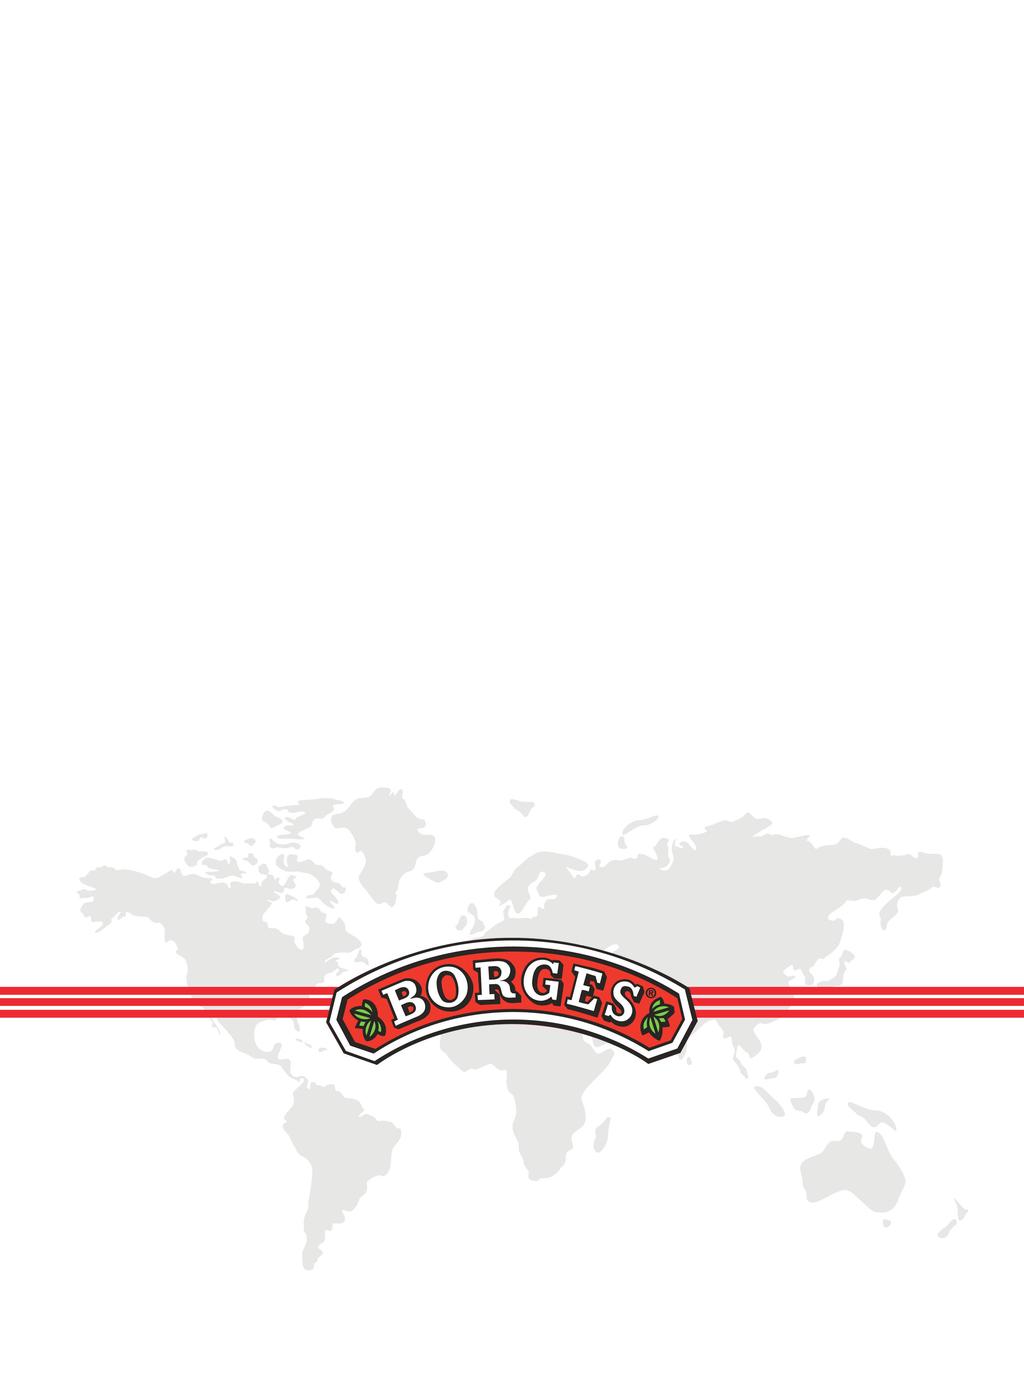 Sobre a Borges O Borges Mediterranean Group difunde, através de seus produtos, os valores do modo de vida mediterrâneo entre os consumidores e indústria de todo o mundo.